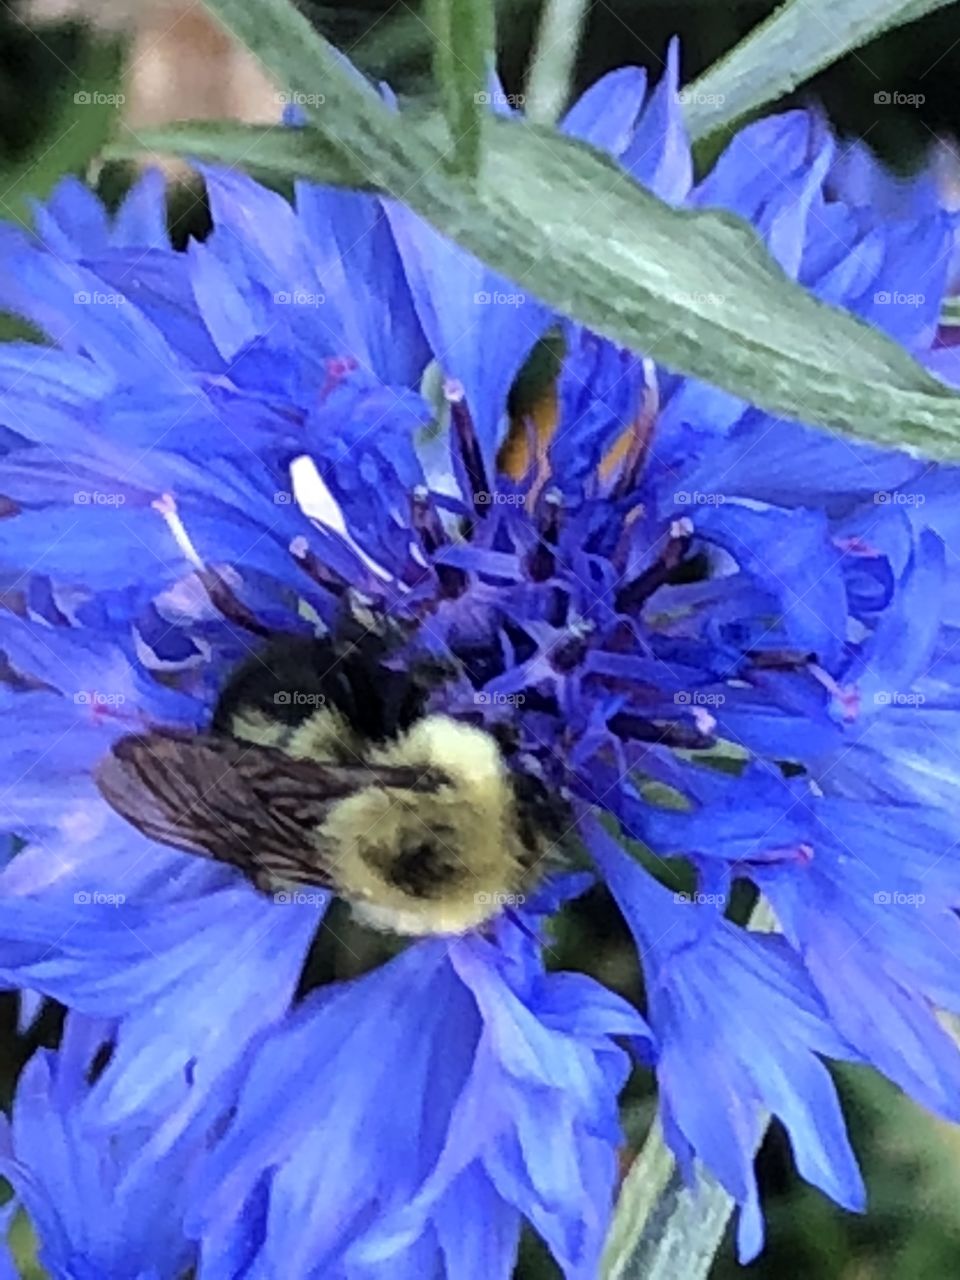 Bumble bee working!